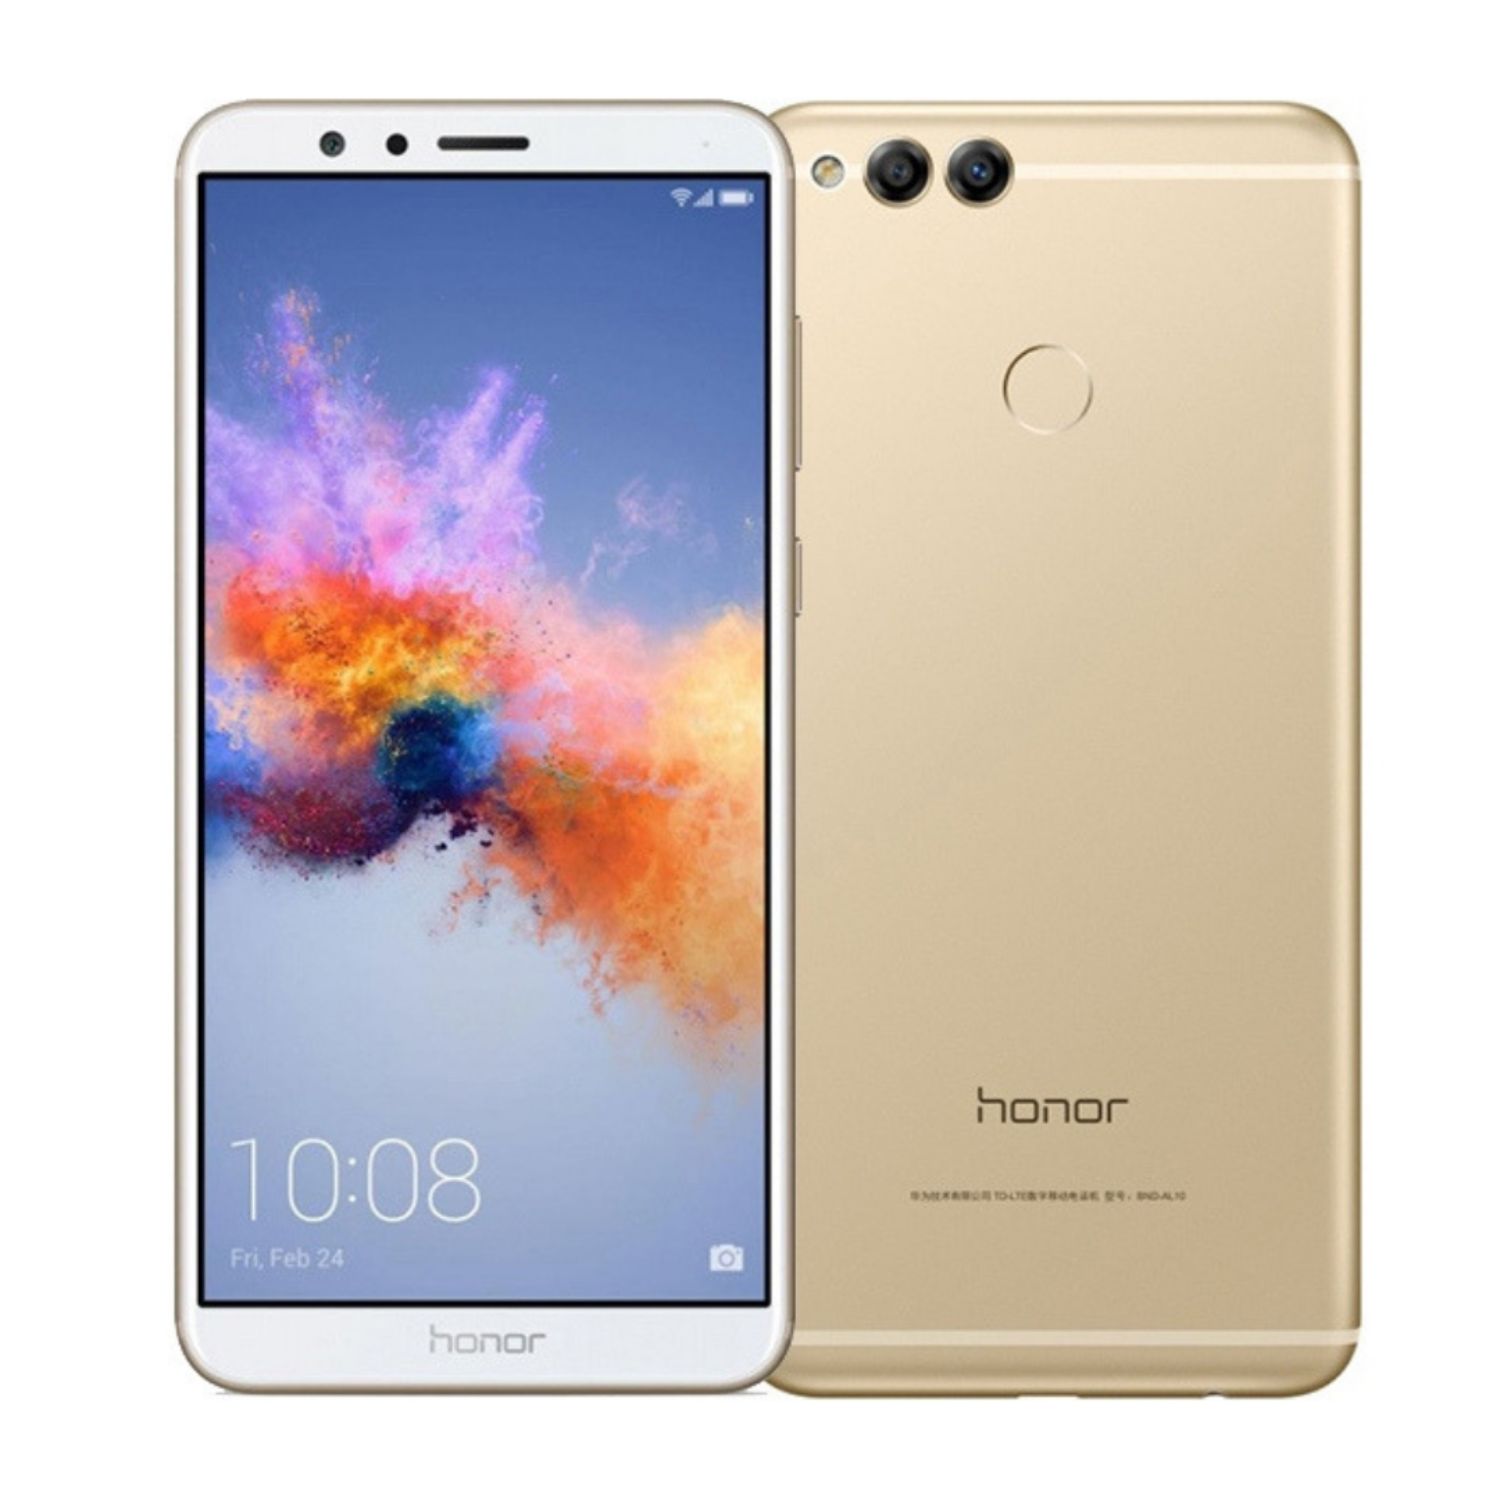 Хонор х7 б цена. Смартфон Huawei y5 Prime. Смартфон Honor x7. Хонор Икс 7. Смартфон Huawei y5 Prime 2018.